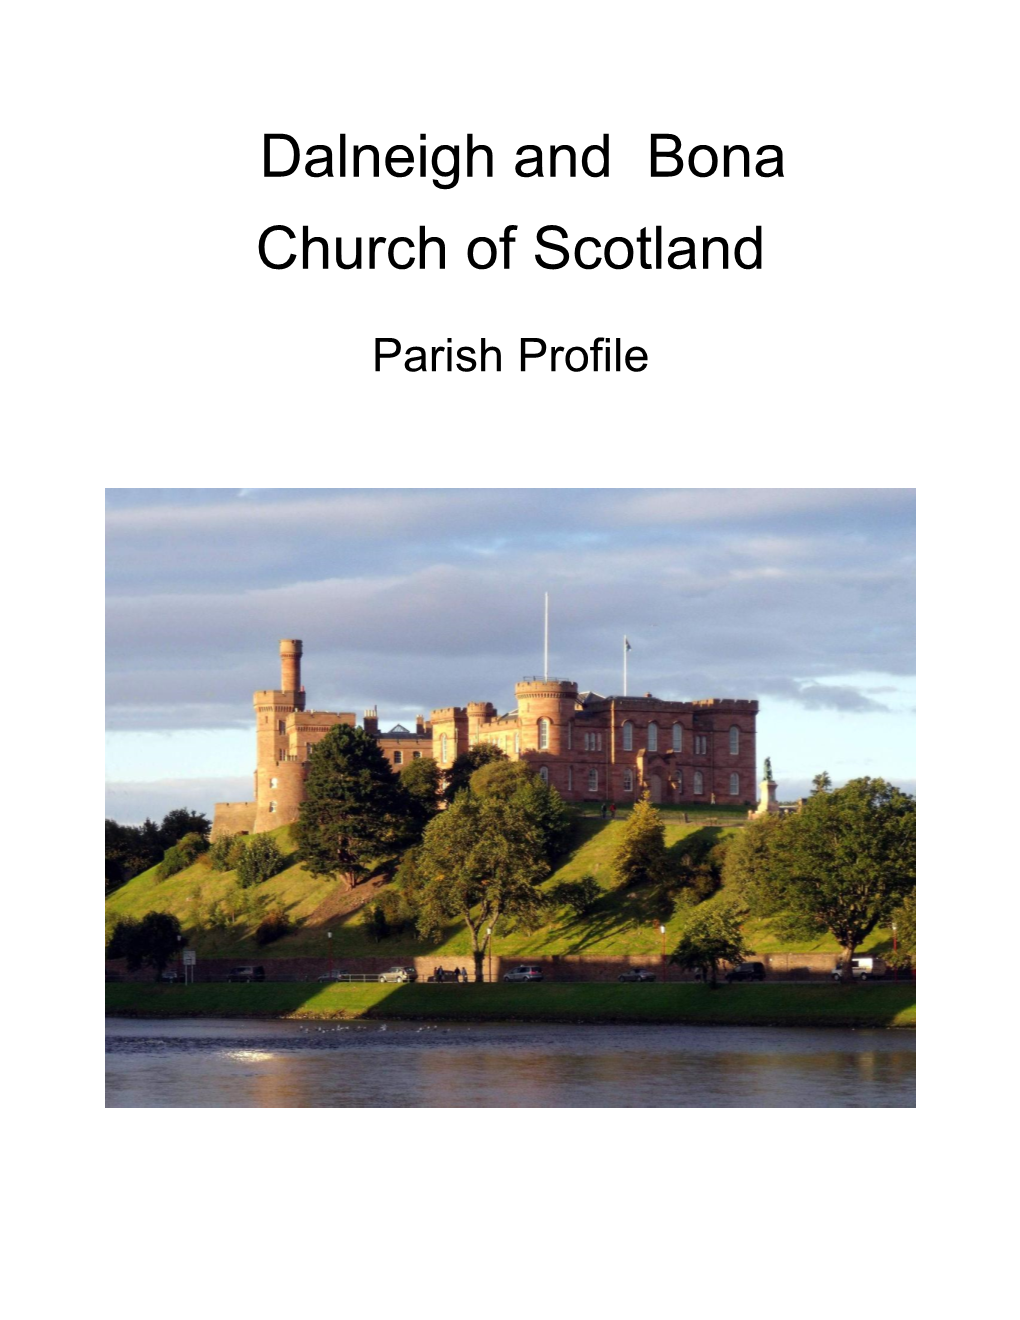 Dalneigh and Bona Church of Scotland